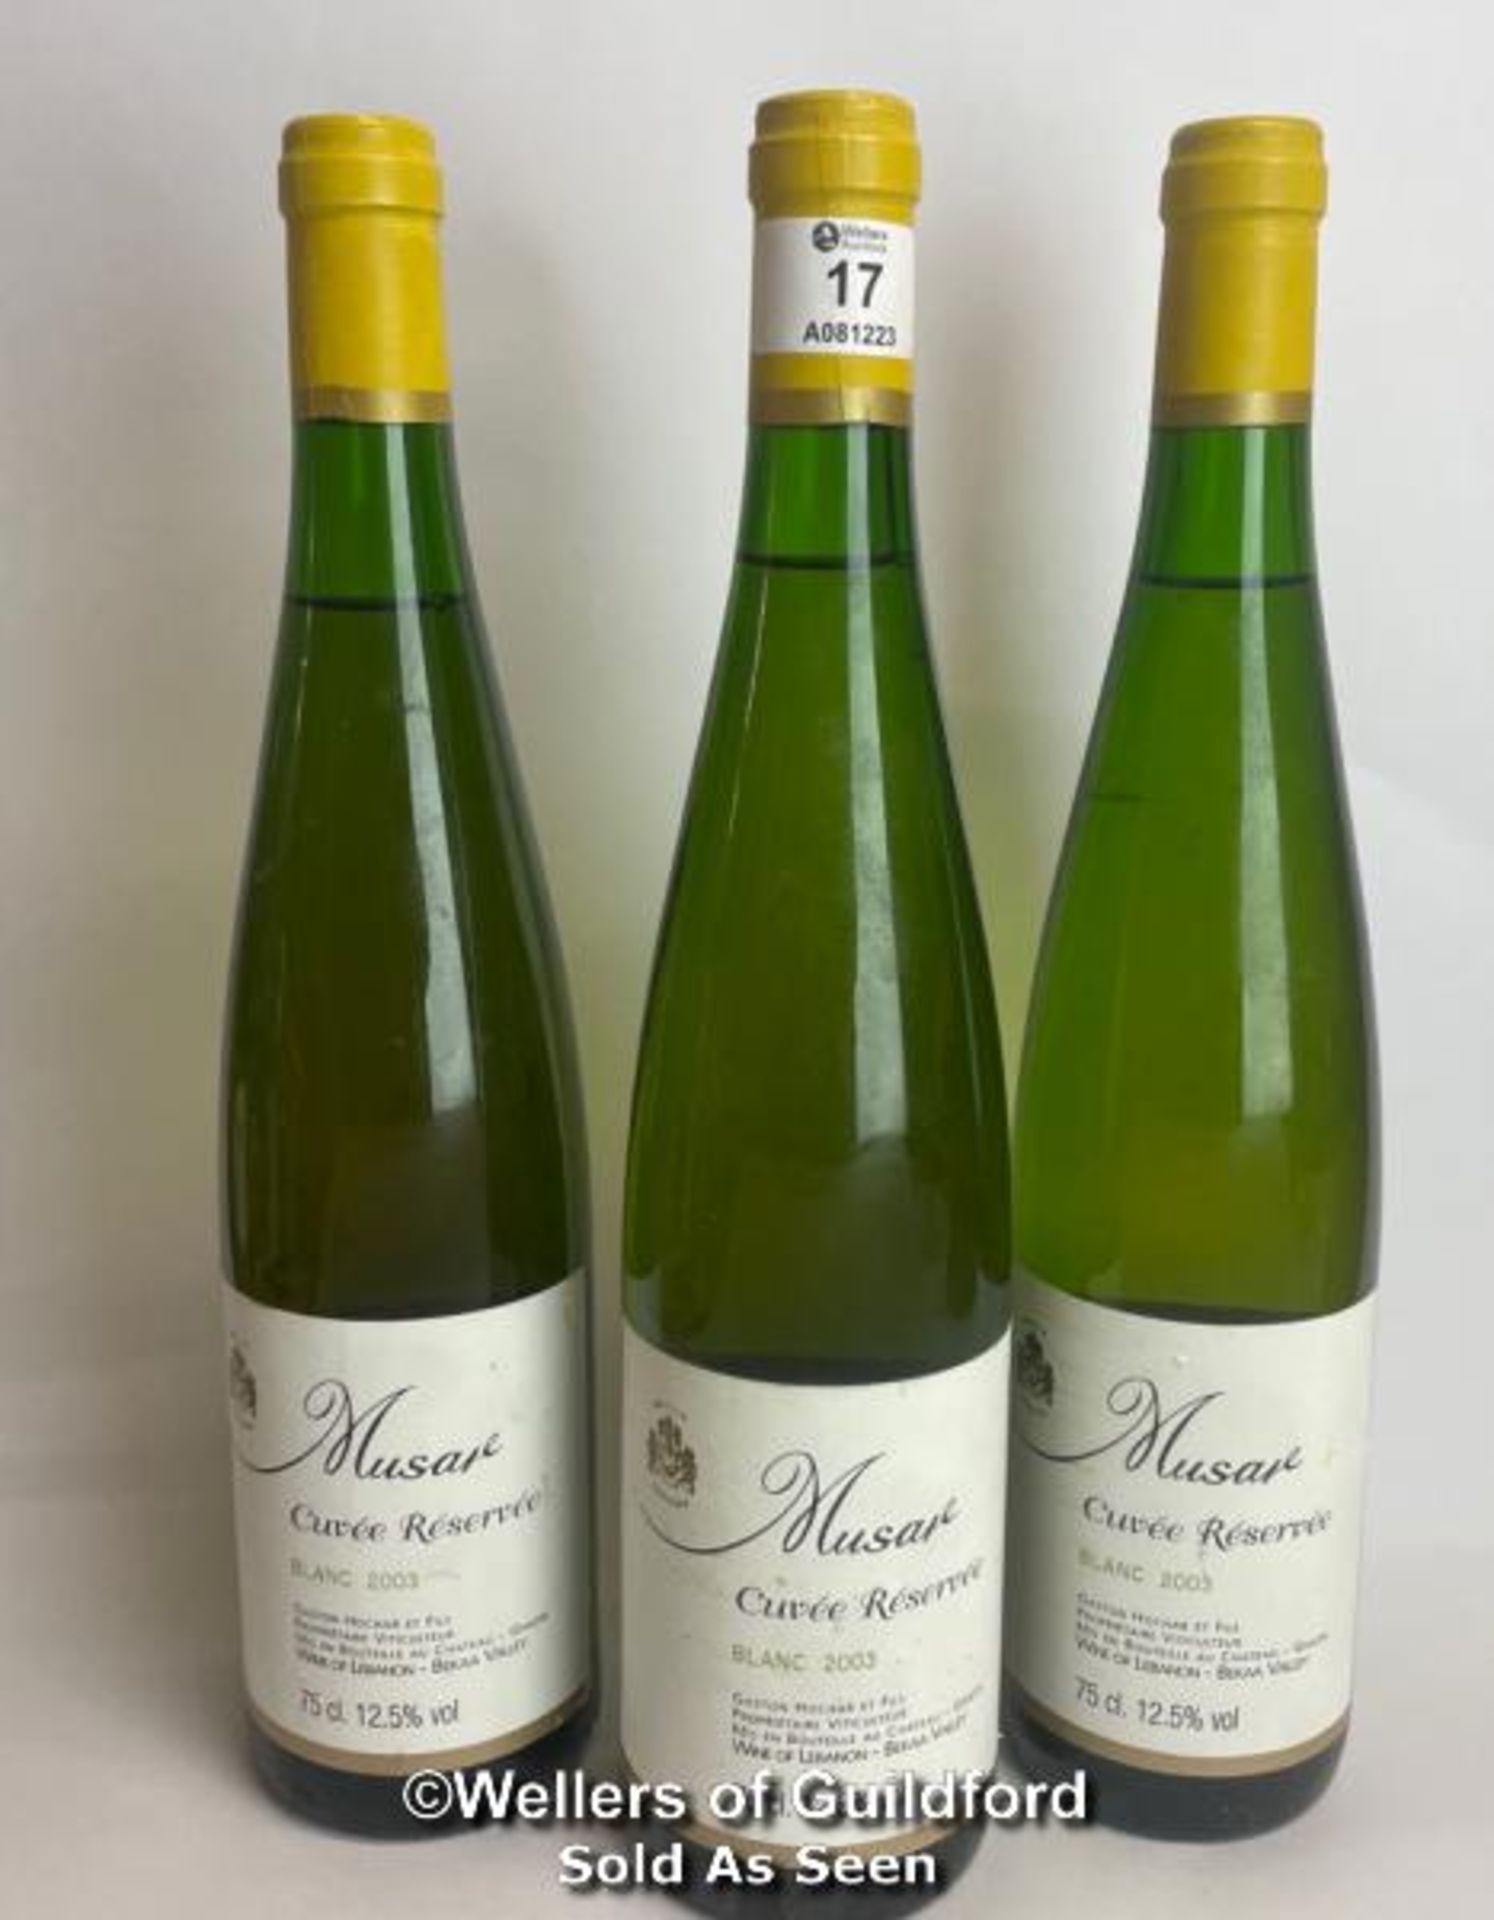 Three bottles of 2003 Musar Cuvee Reserve Blanc, Wine of Lebanon (Bekaa Valley), 75cl, 12.5% vol / - Image 2 of 6